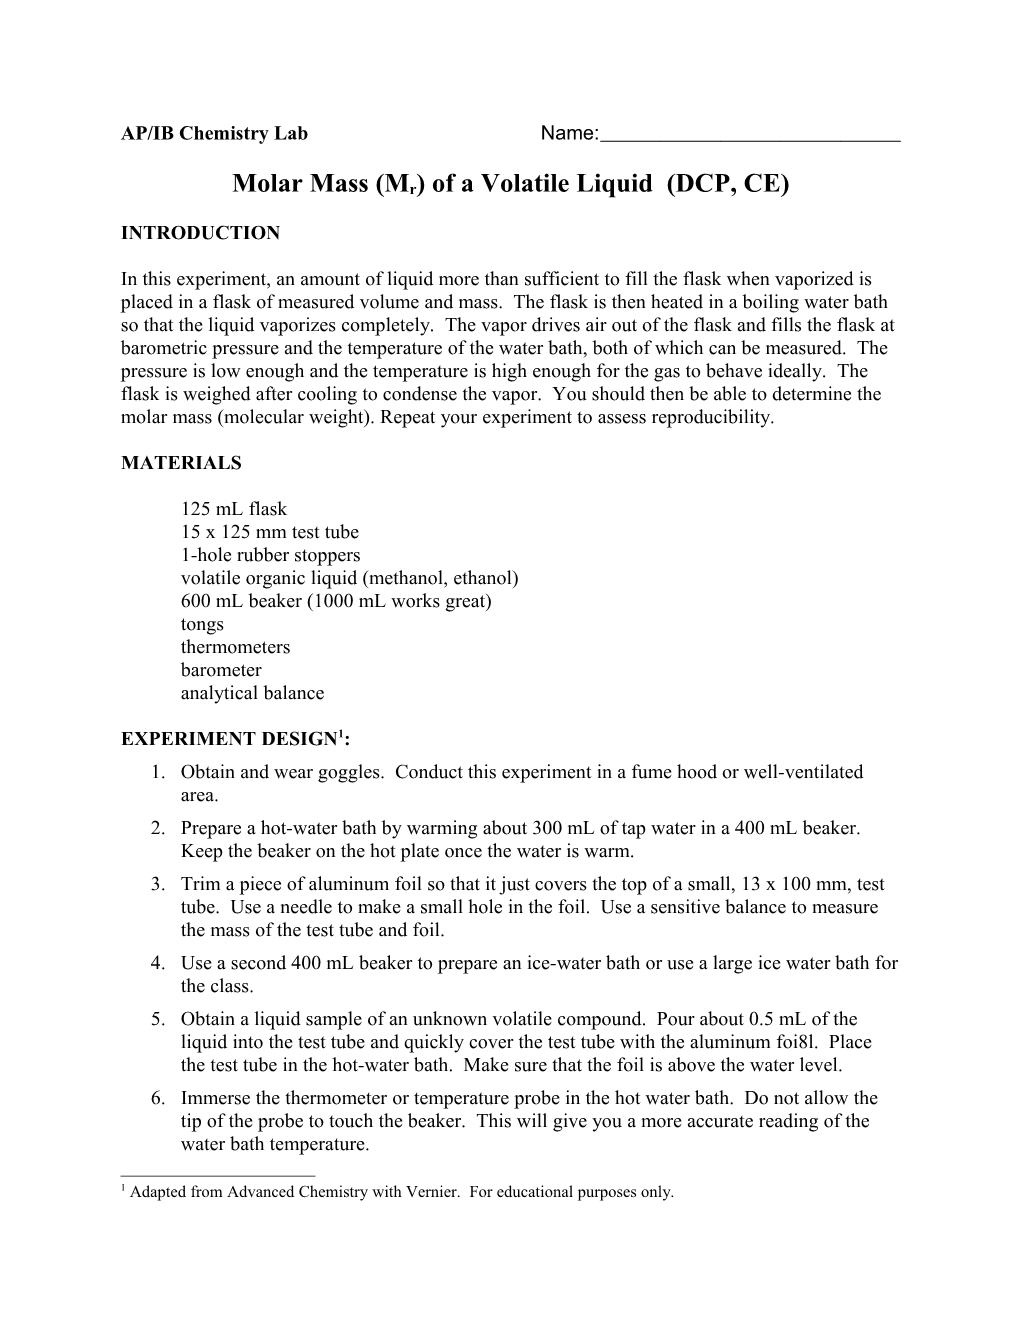 Molecular Weight of a Volatile Liquid 1991 AP Exam Lab Question